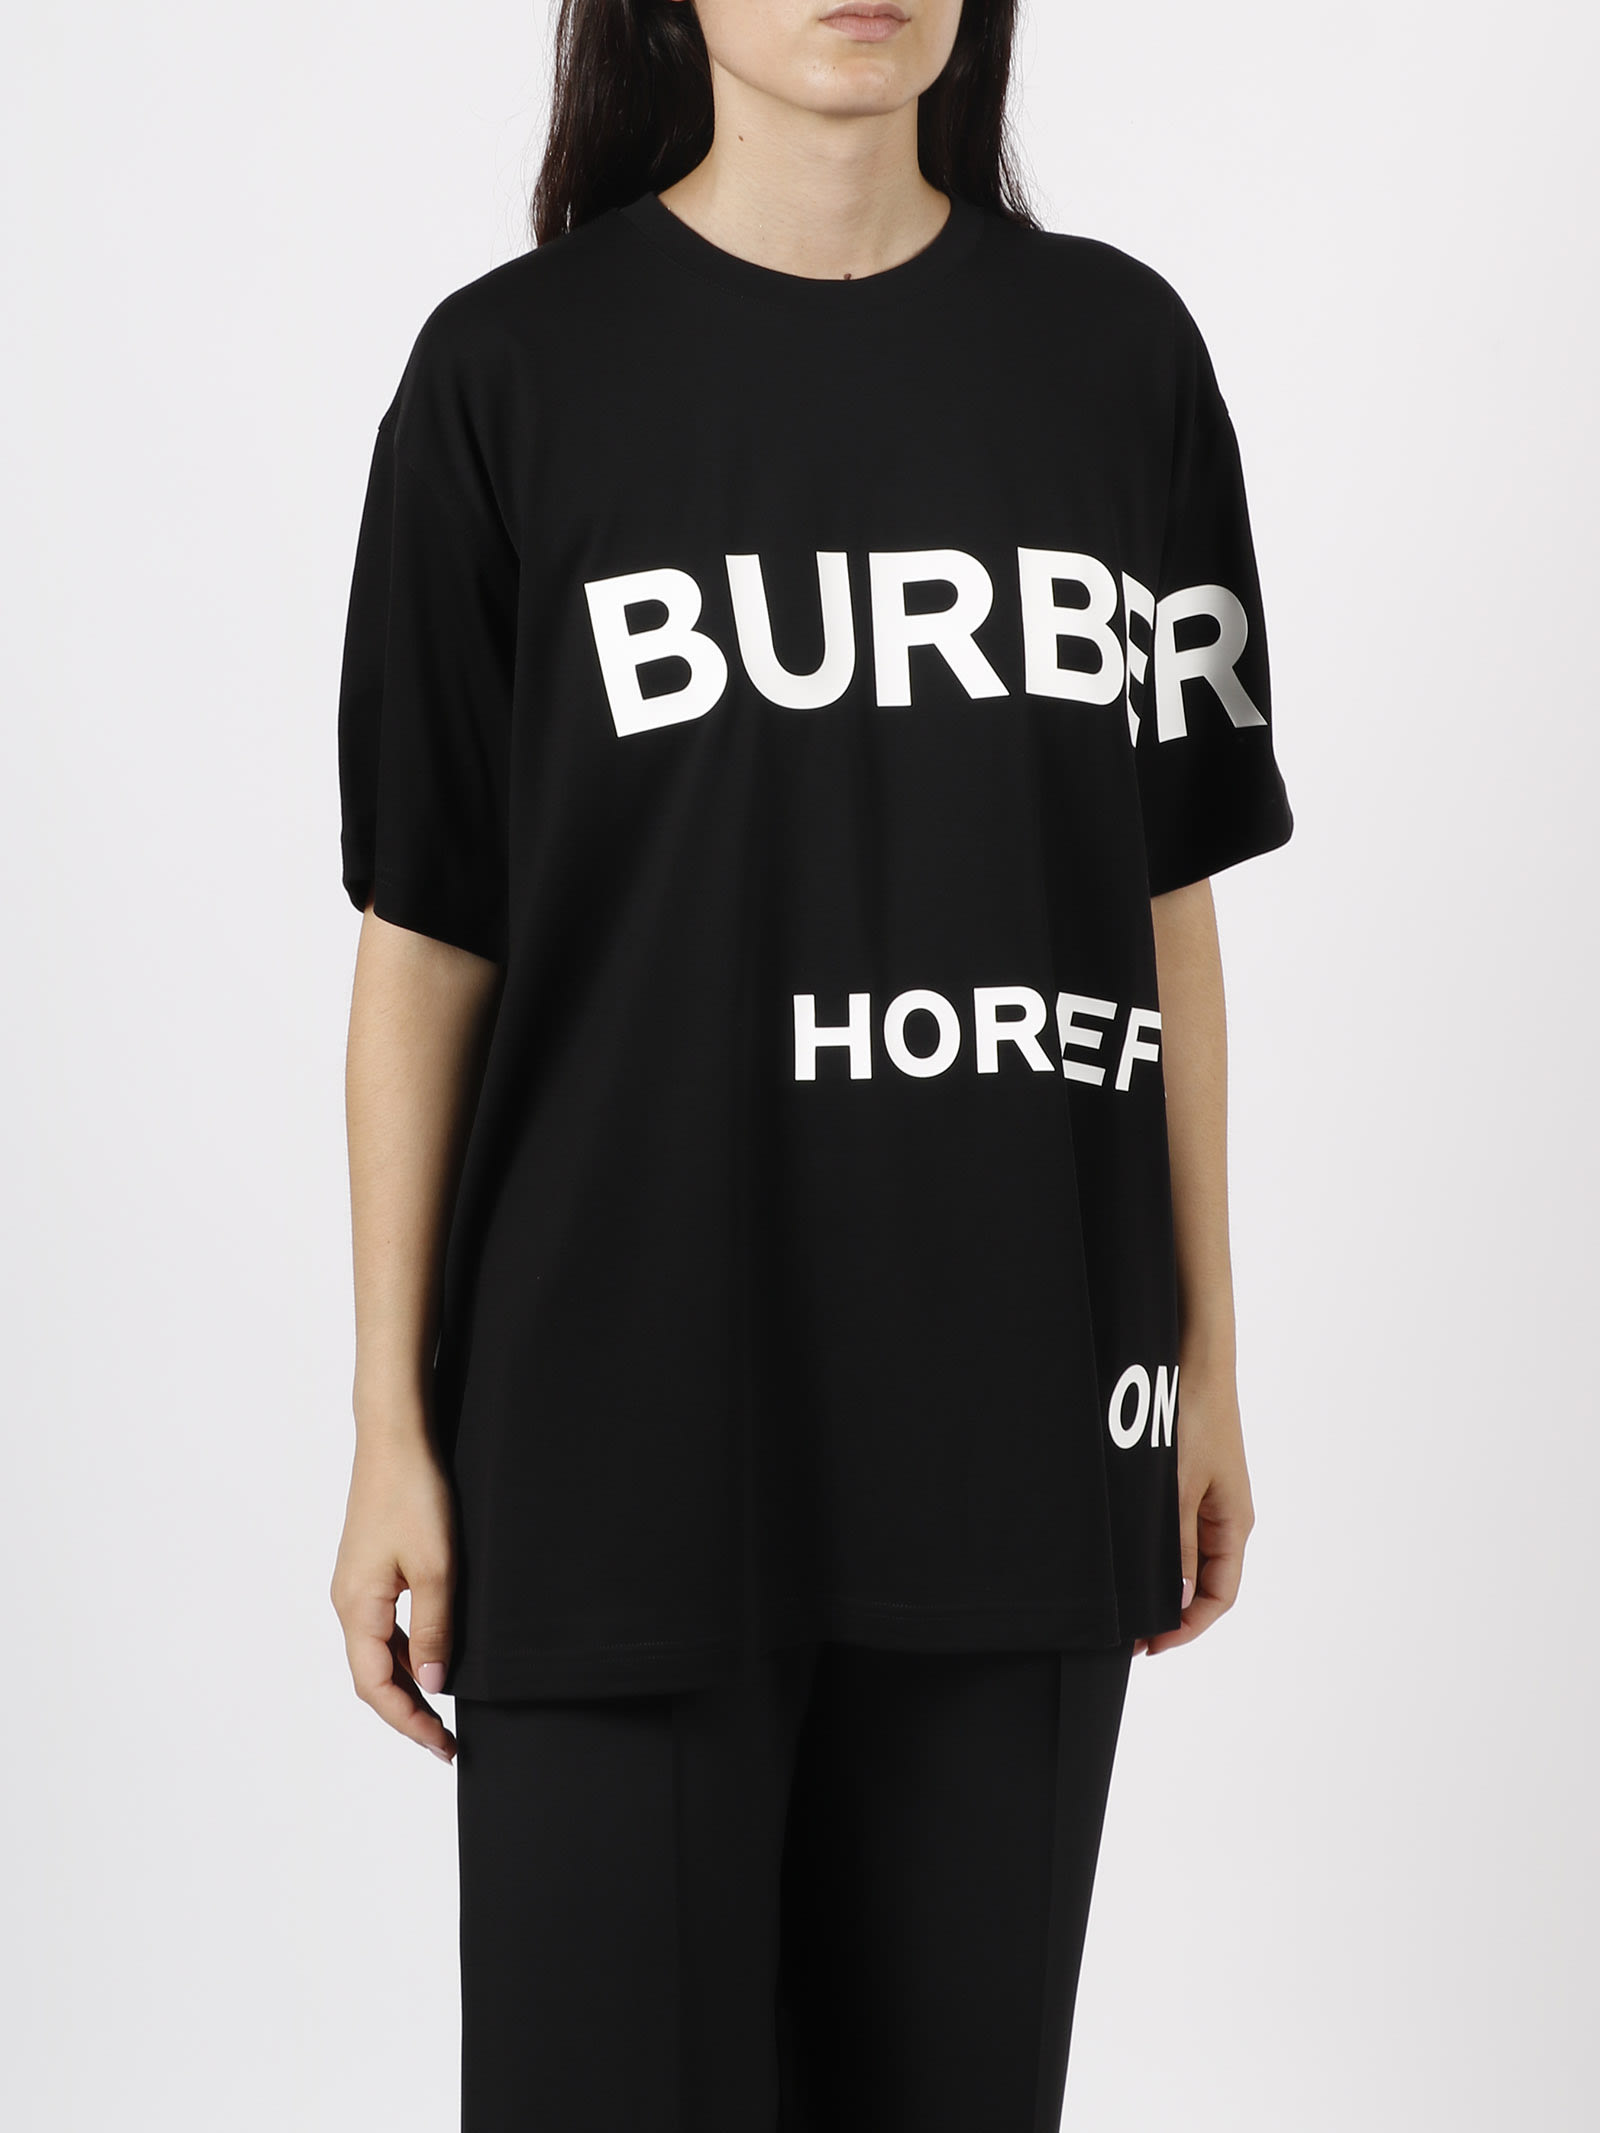 Burberry Horseferry T-shirt